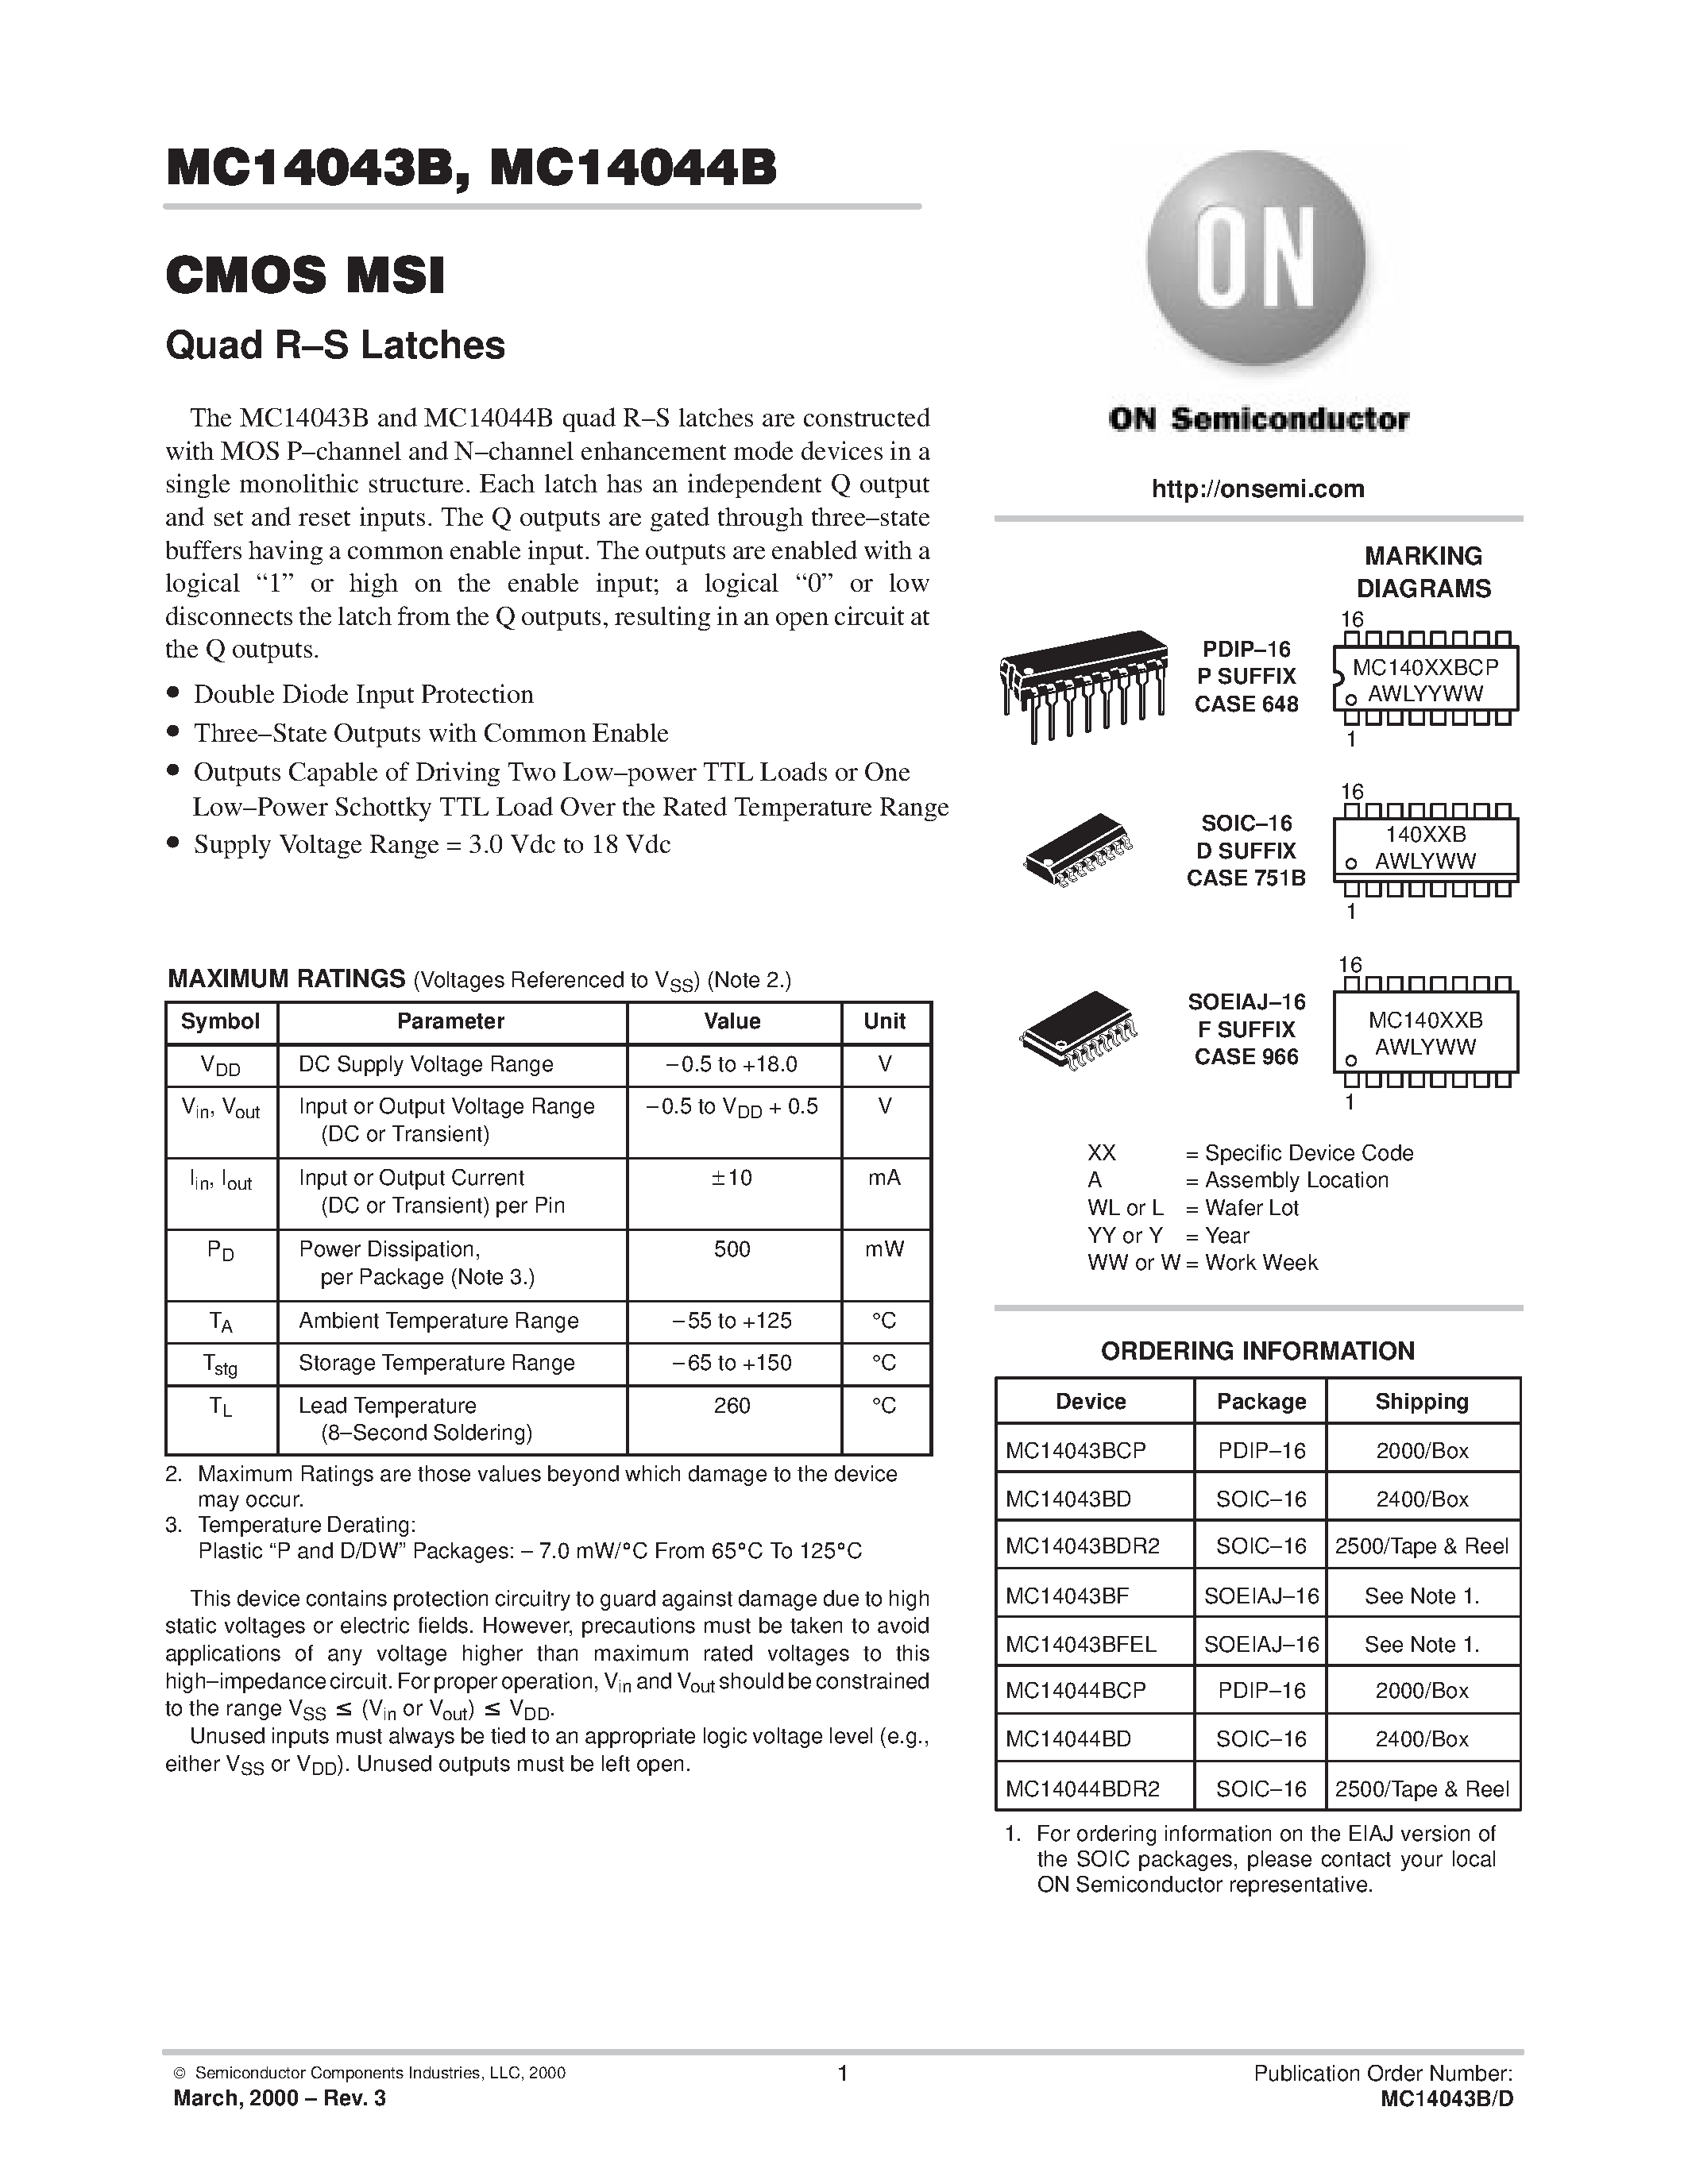 Даташит MC14043BCP - CMOS MSI(Quad R-S Latches) страница 1